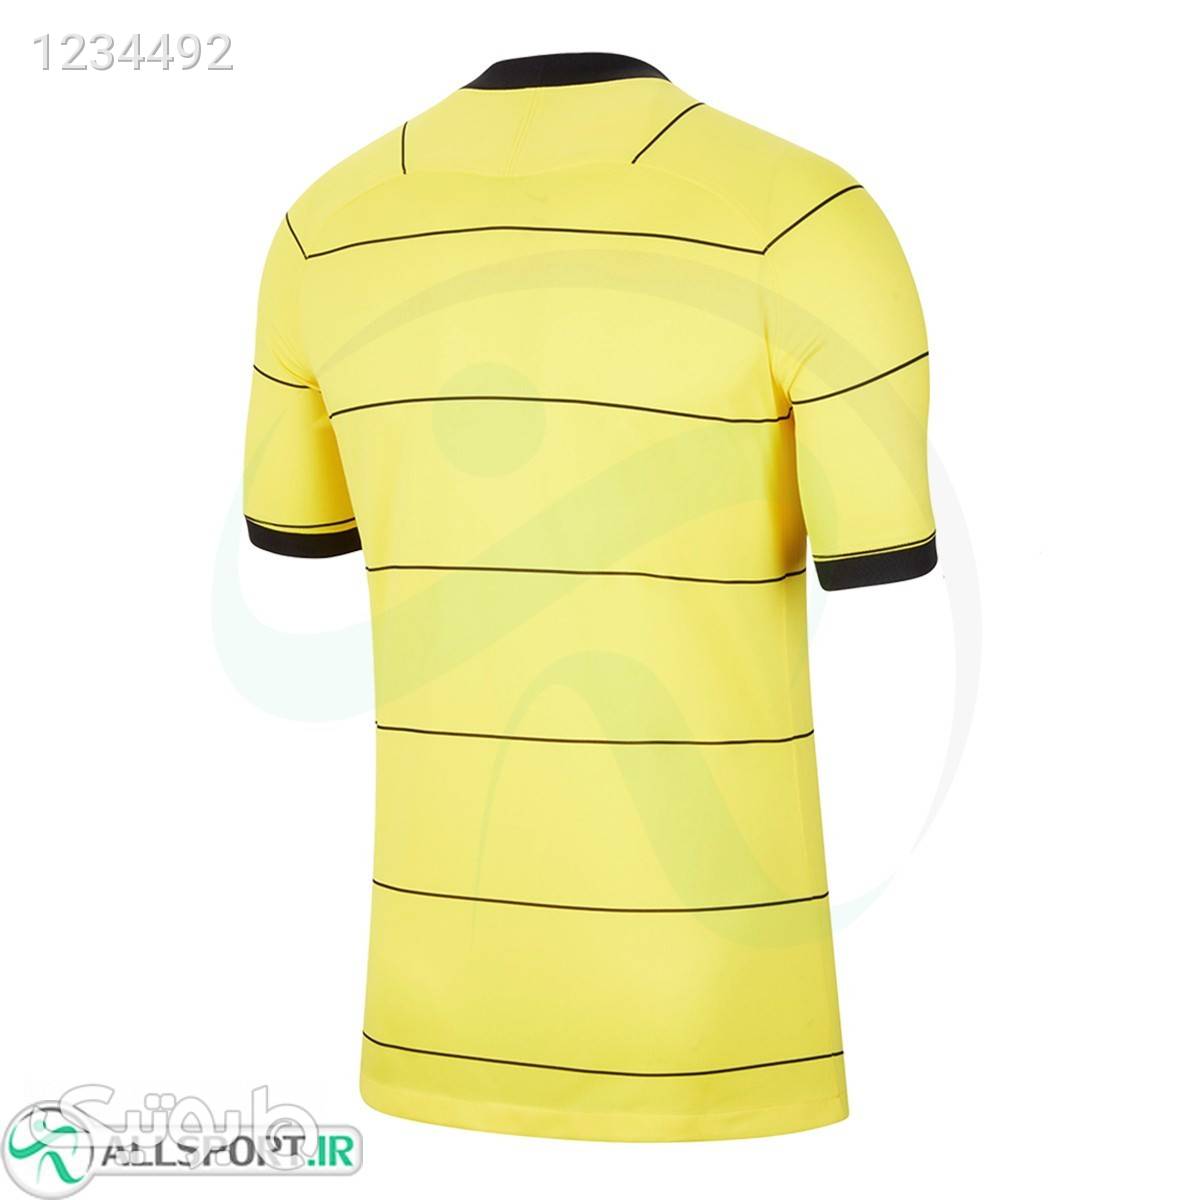 پیراهن پلیری دوم چلسی Chelsea 202122 Away Soccer Jersey زرد ست ورزشی مردانه